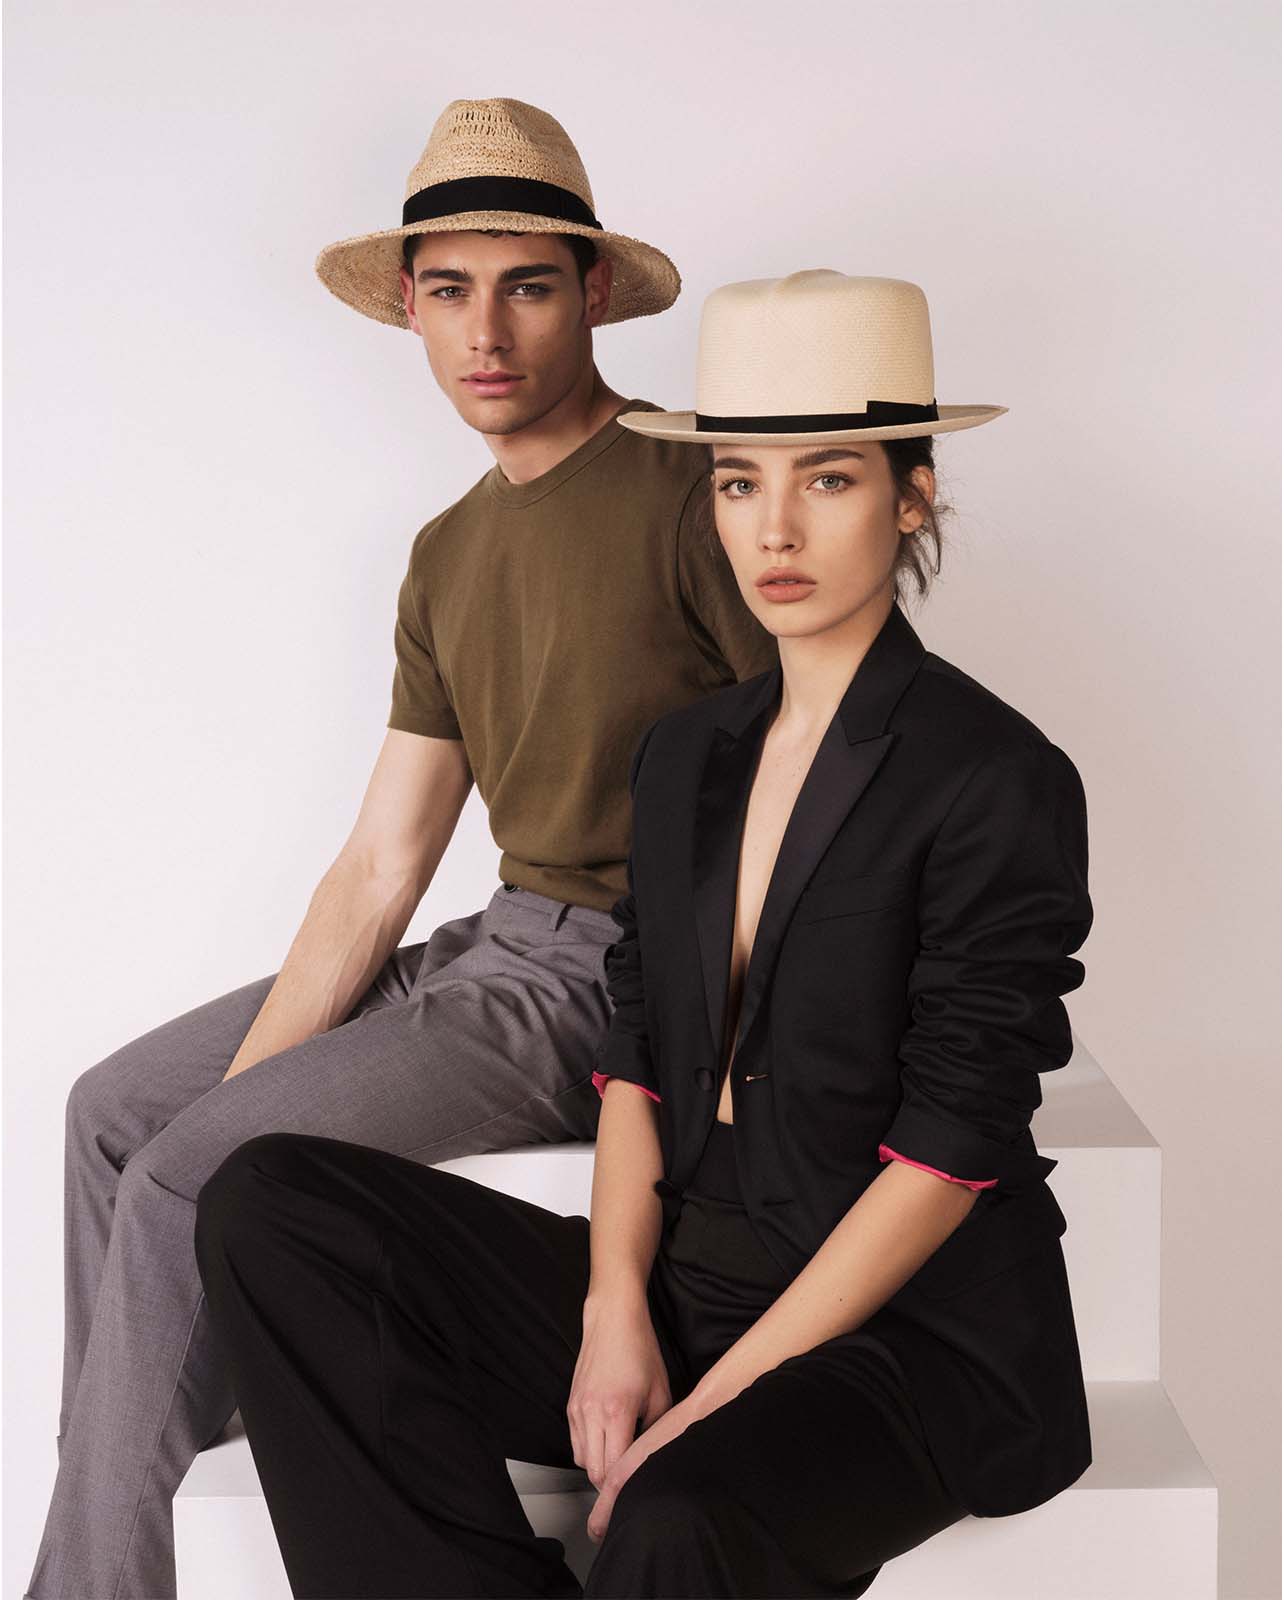 Campaign image of models wearing Borsalino hats